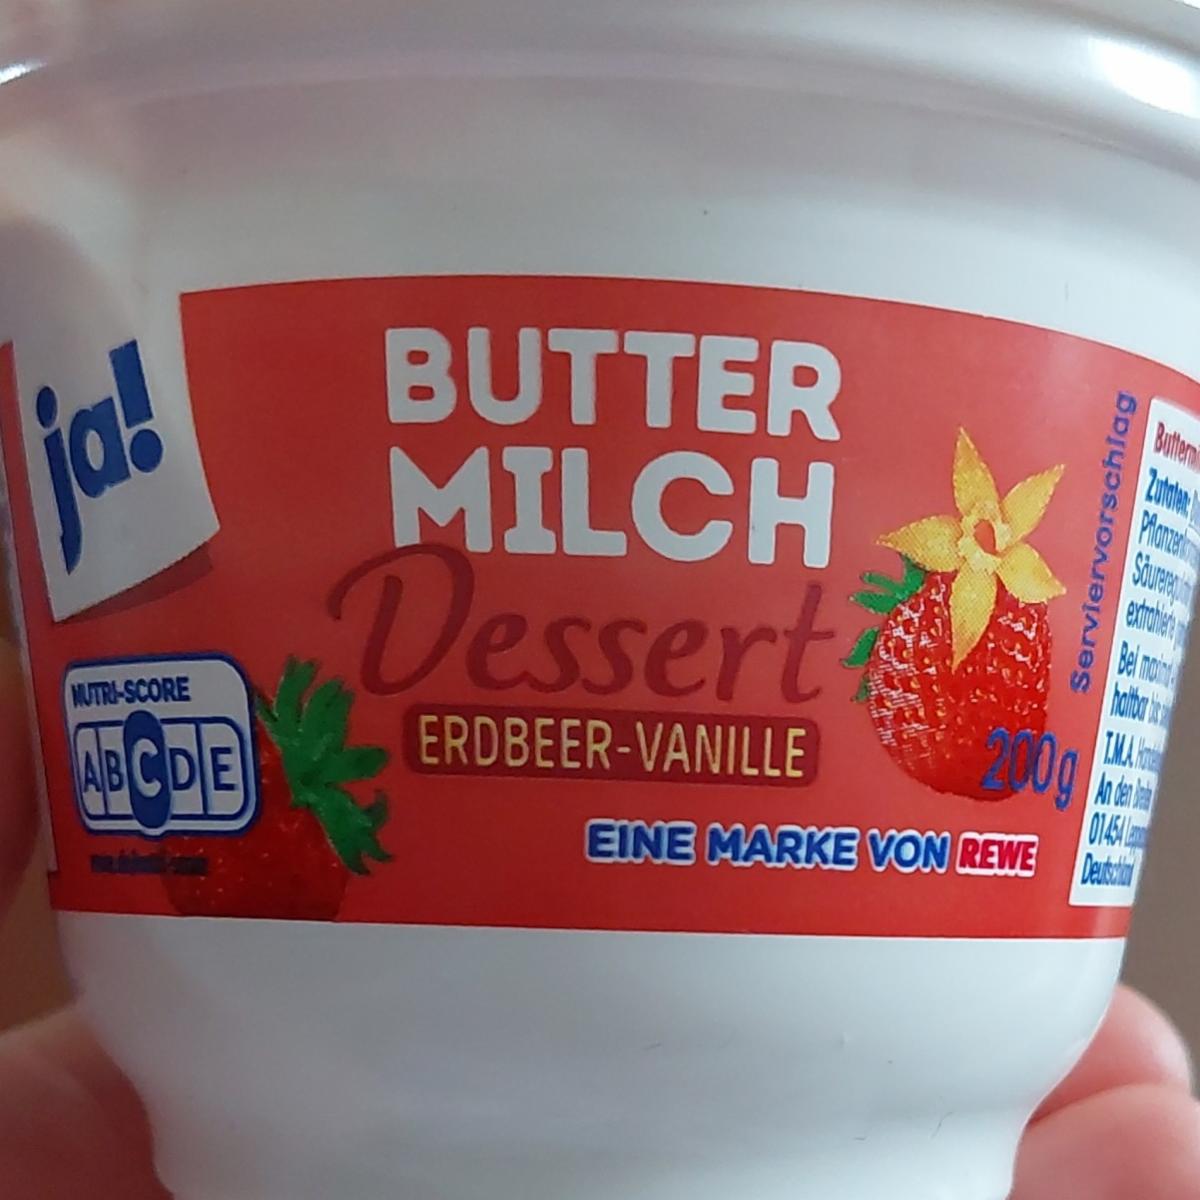 Fotografie - Butter Milch Dessert Erdbeer-Vanille Ja!